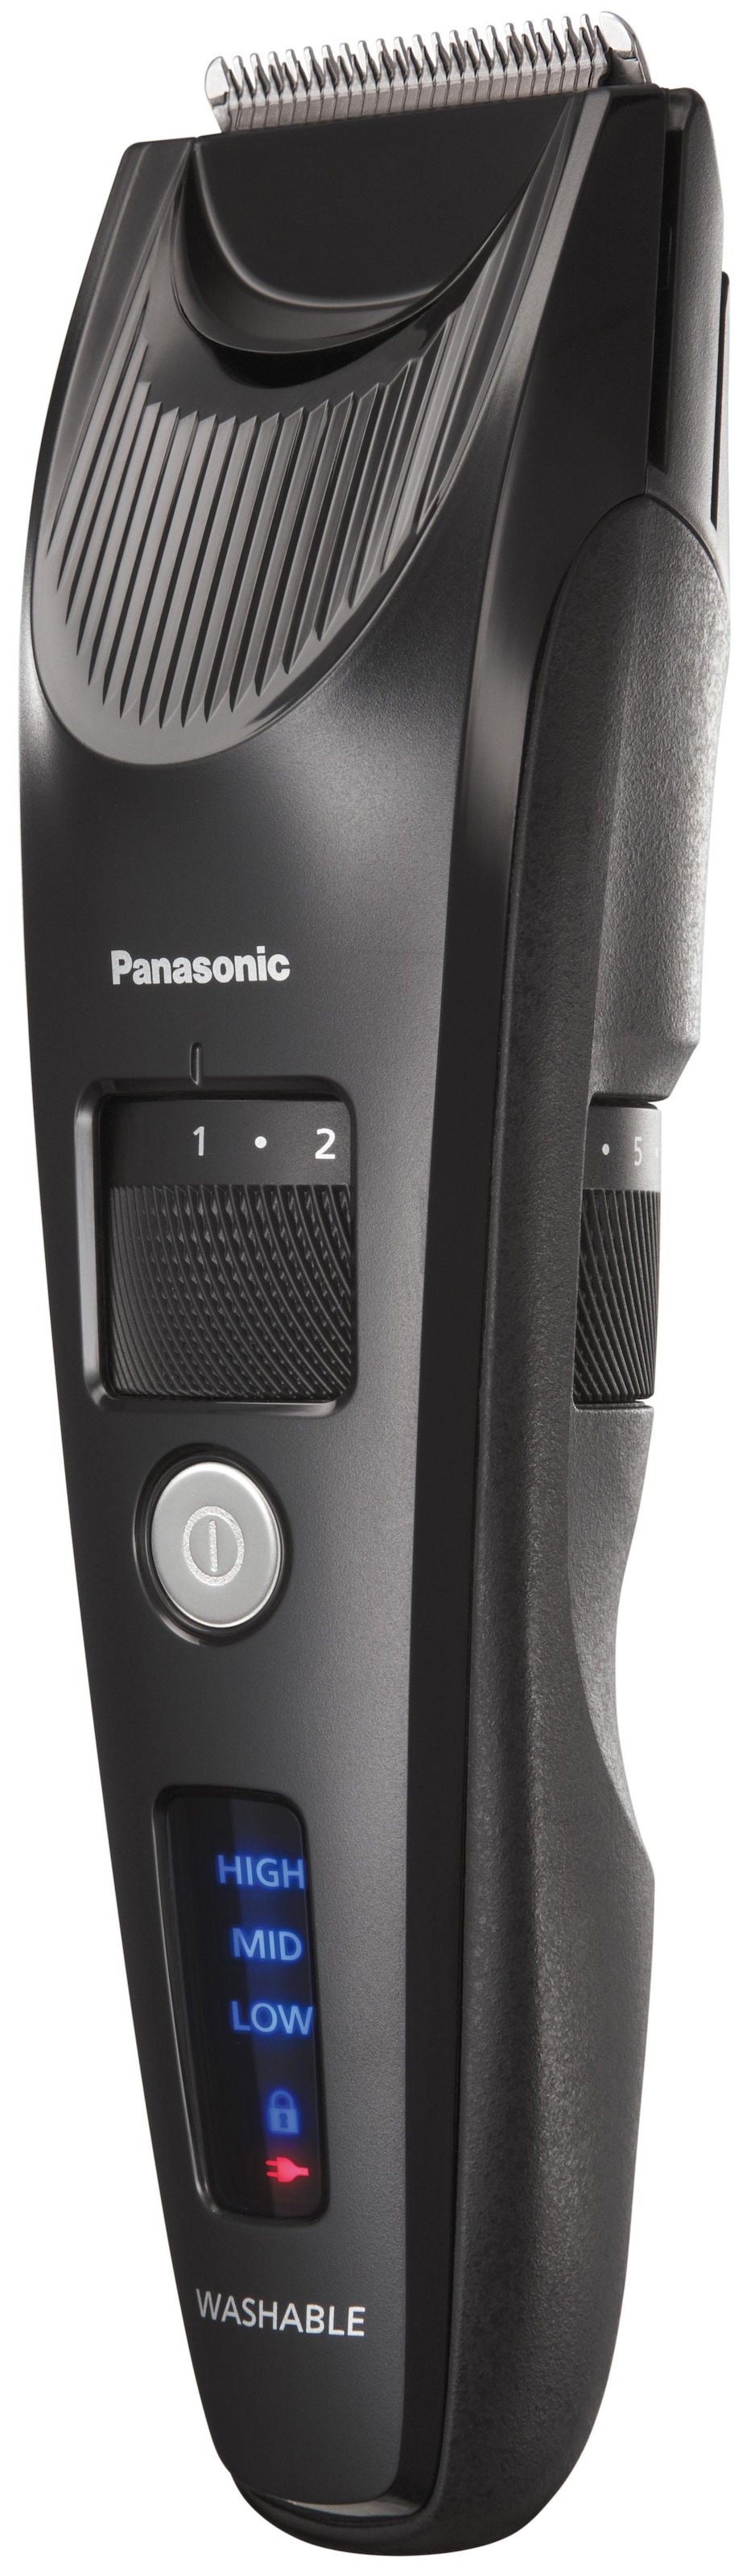 Panasonic Haar- ir Bartschneider »ER-SC40-K803« ...